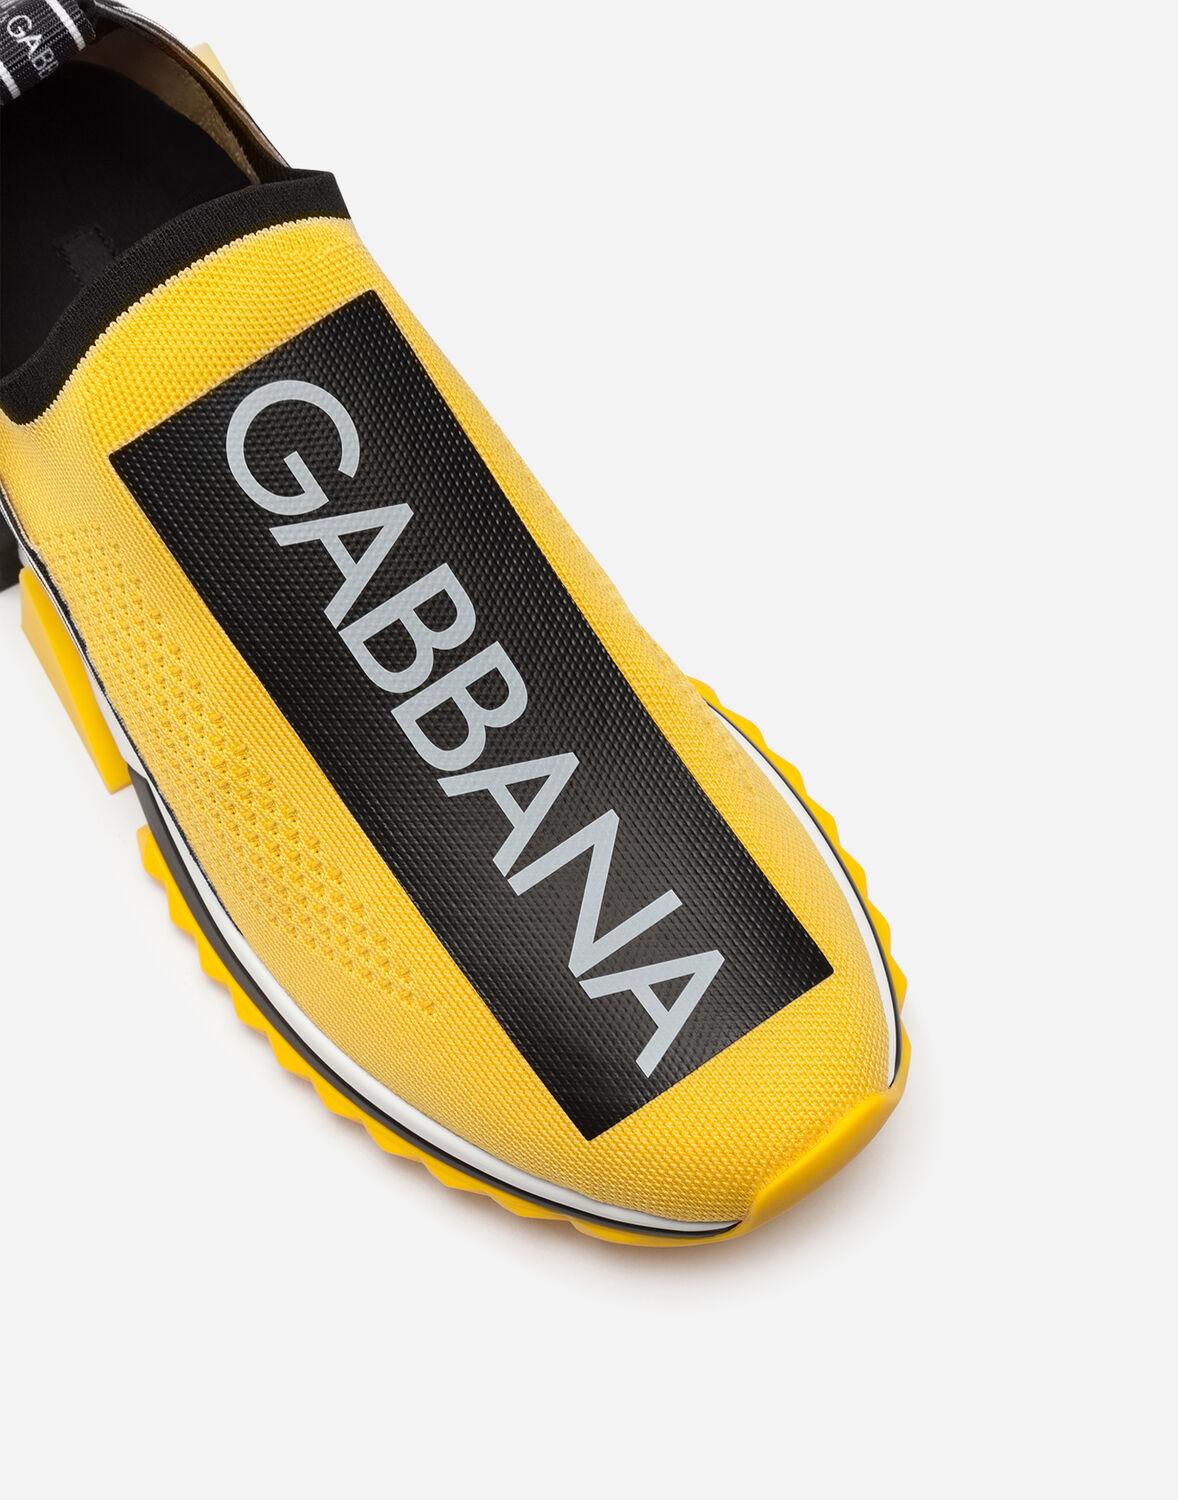 dolce & gabbana shoes yellow